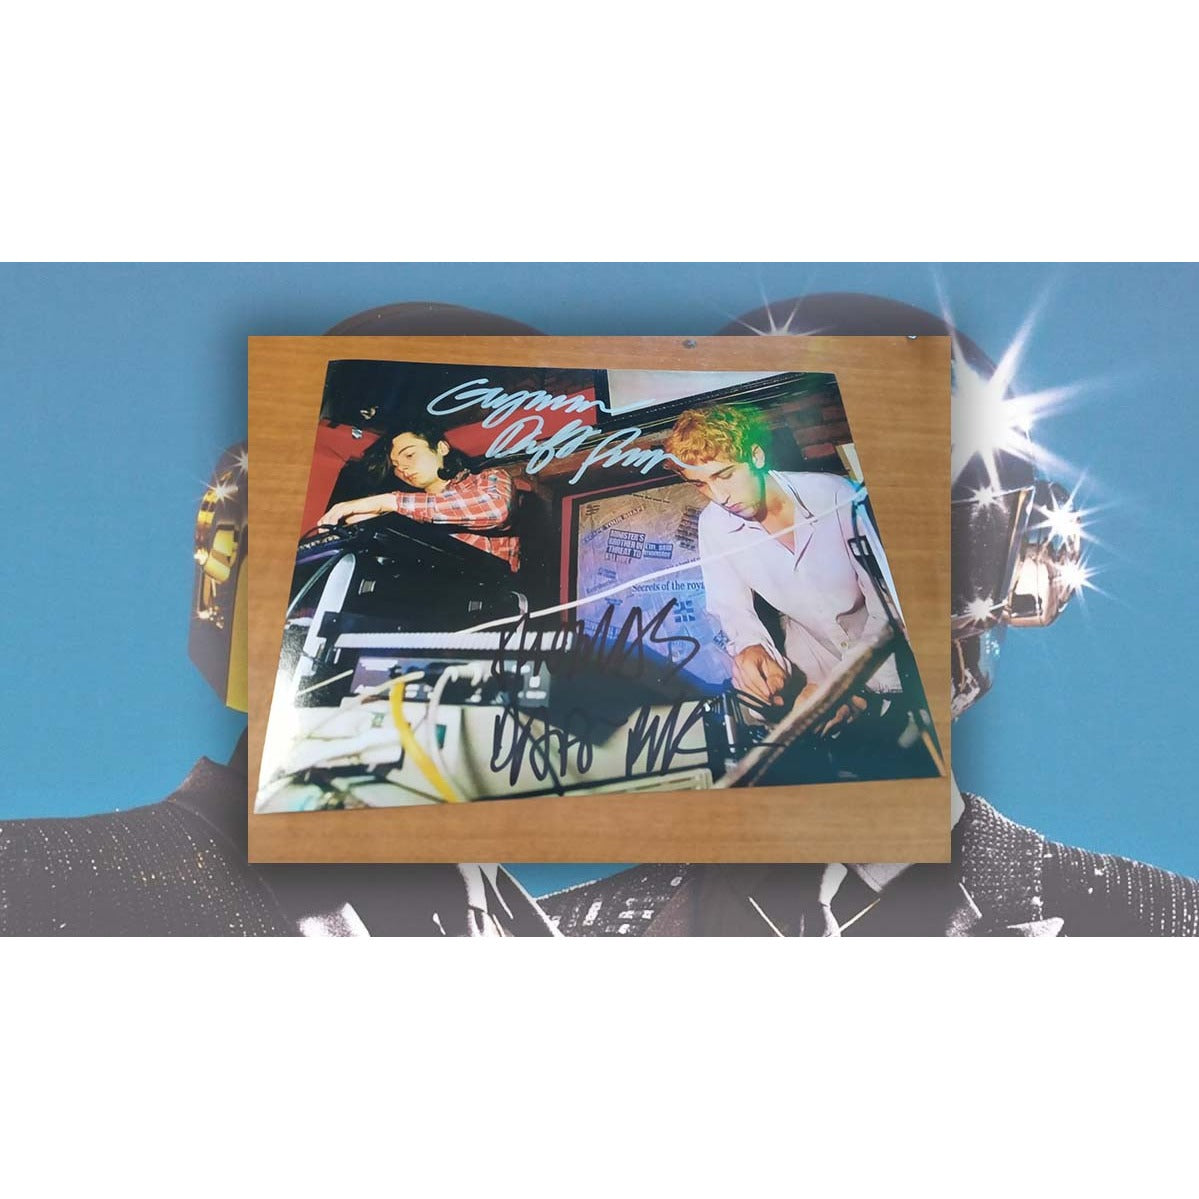 Daft Punk Thomas Bangalter and Guy-Manuel de Homem-Christo 8x10 photograph signed with proof